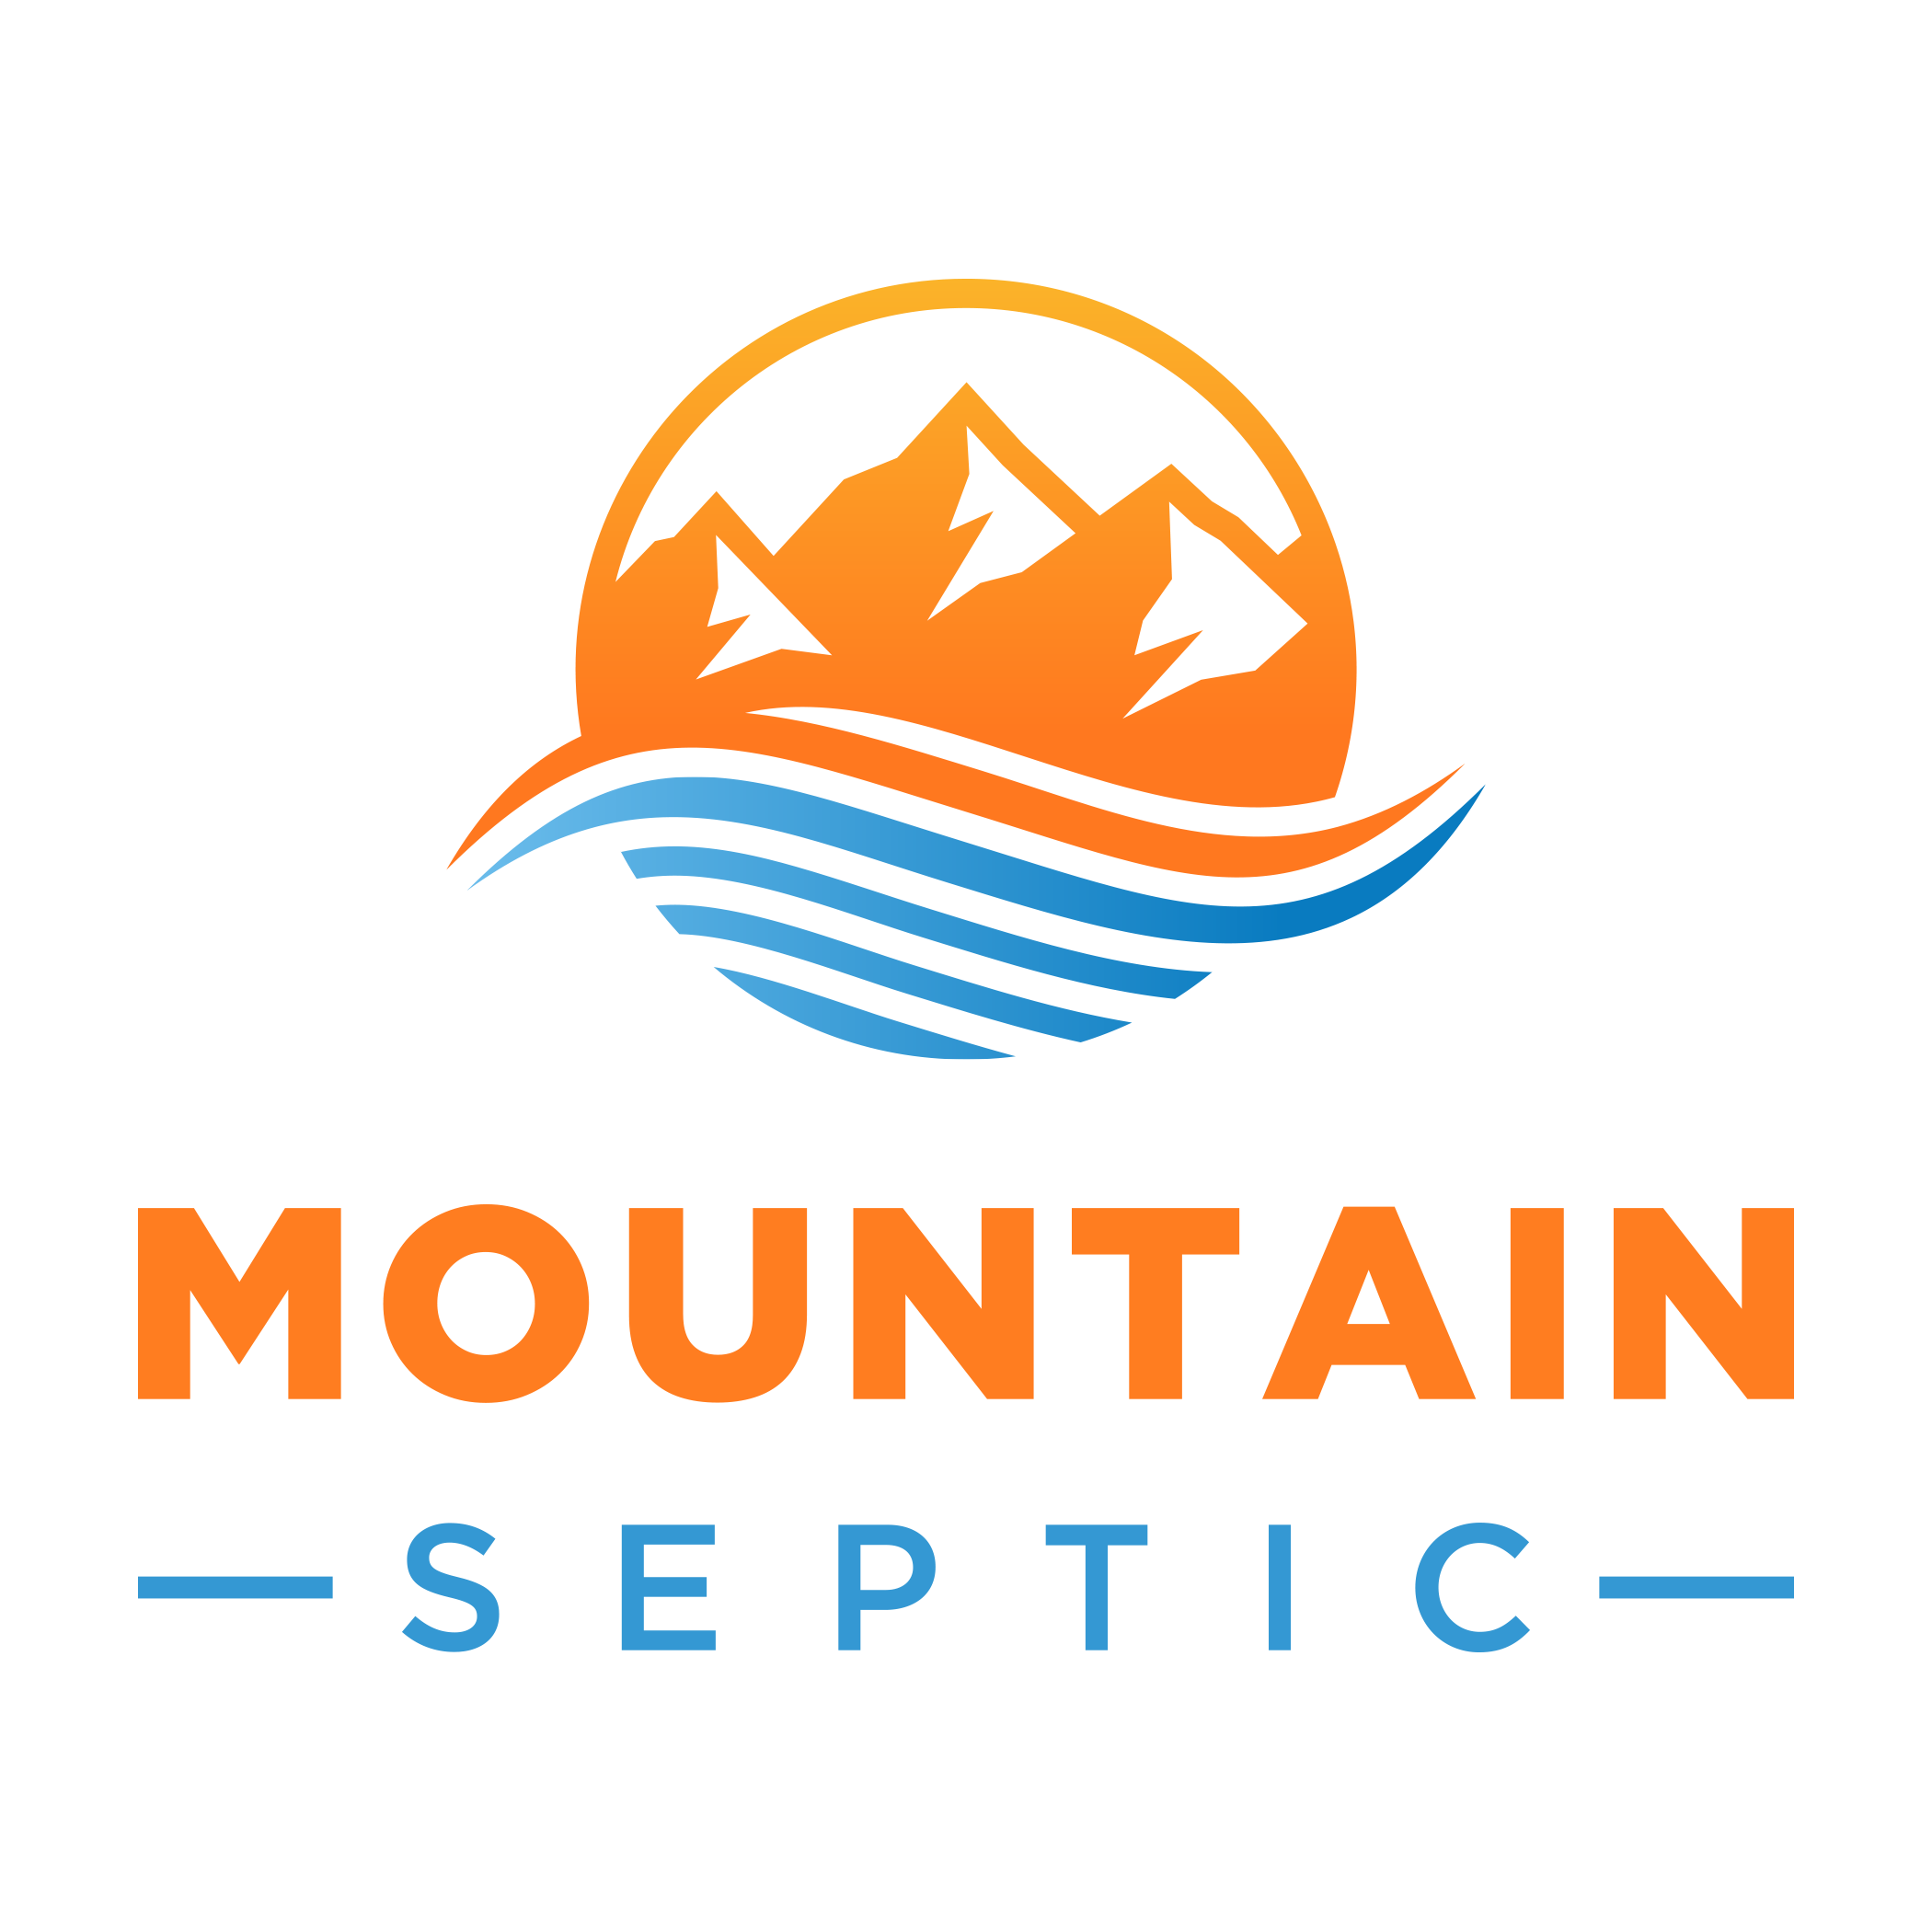 Mountain Septic logo.png